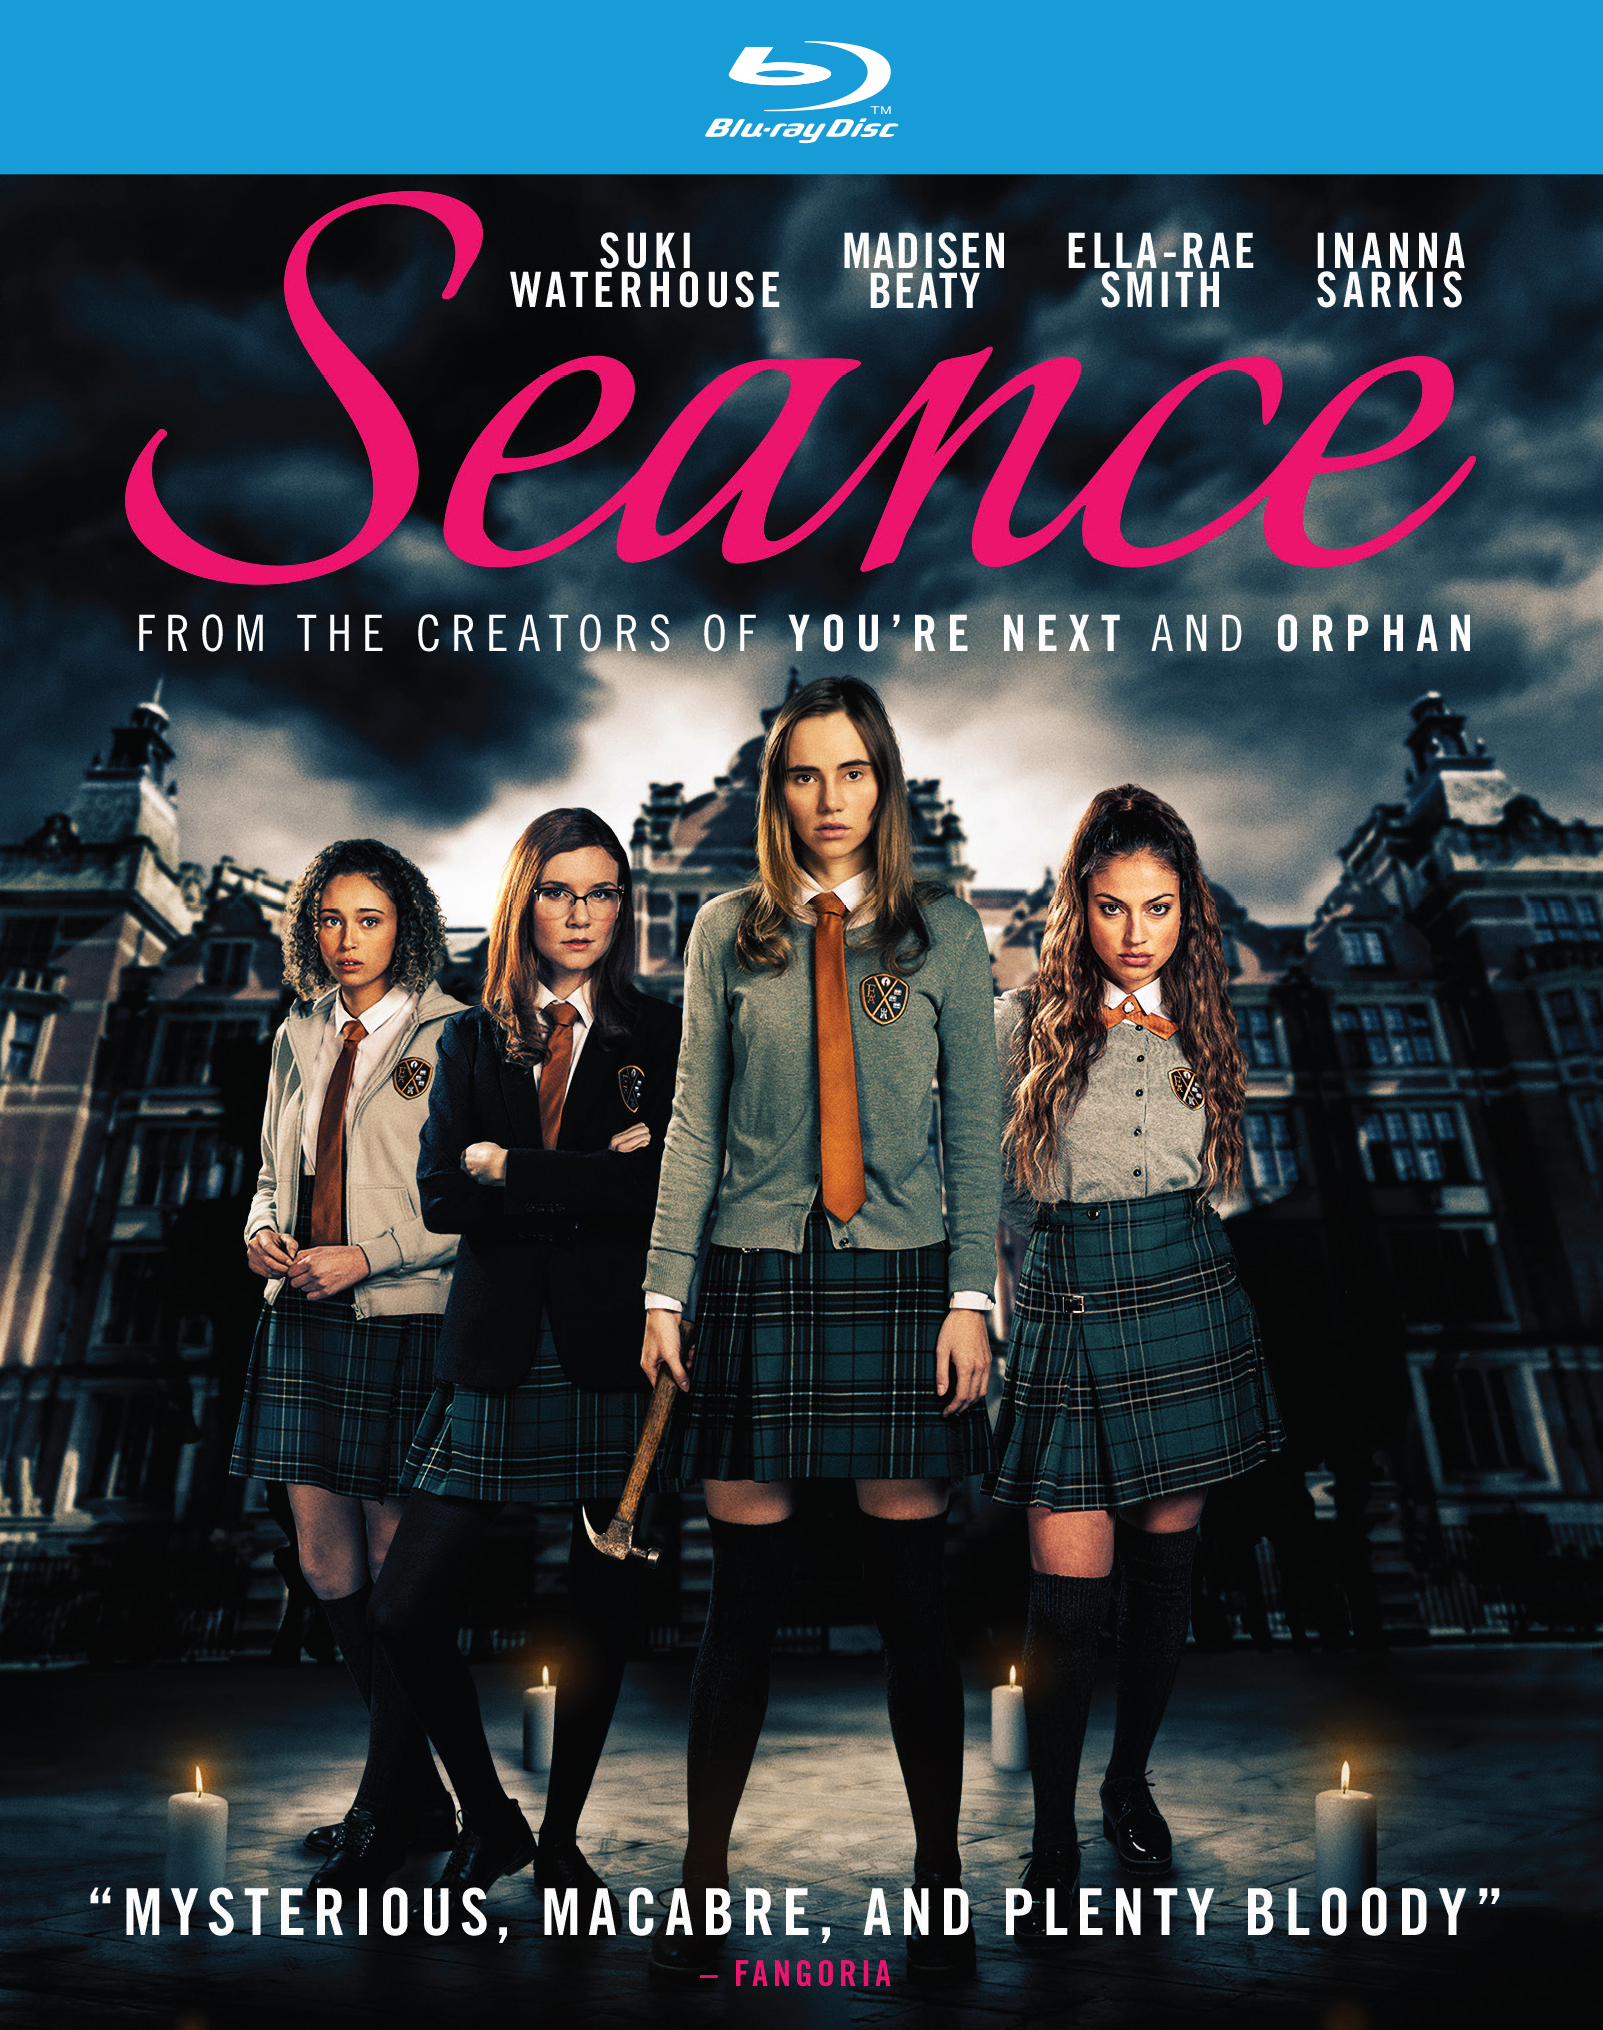 Seance [Blu-ray] [2021] - Best Buy